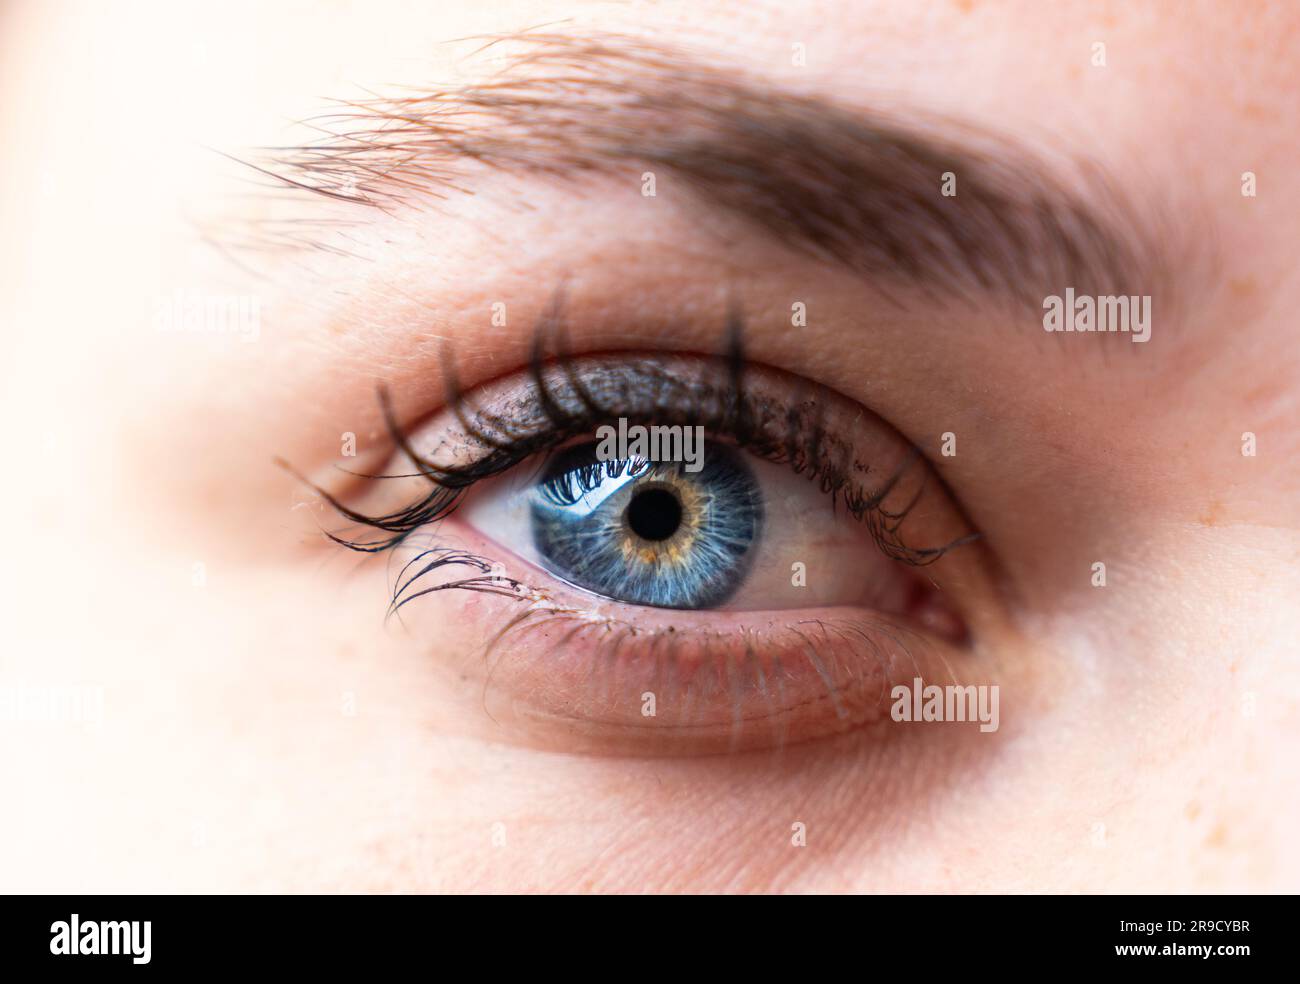 Mesmerizing hues of blue and orange in this captivating eye close-up. Stock Photo